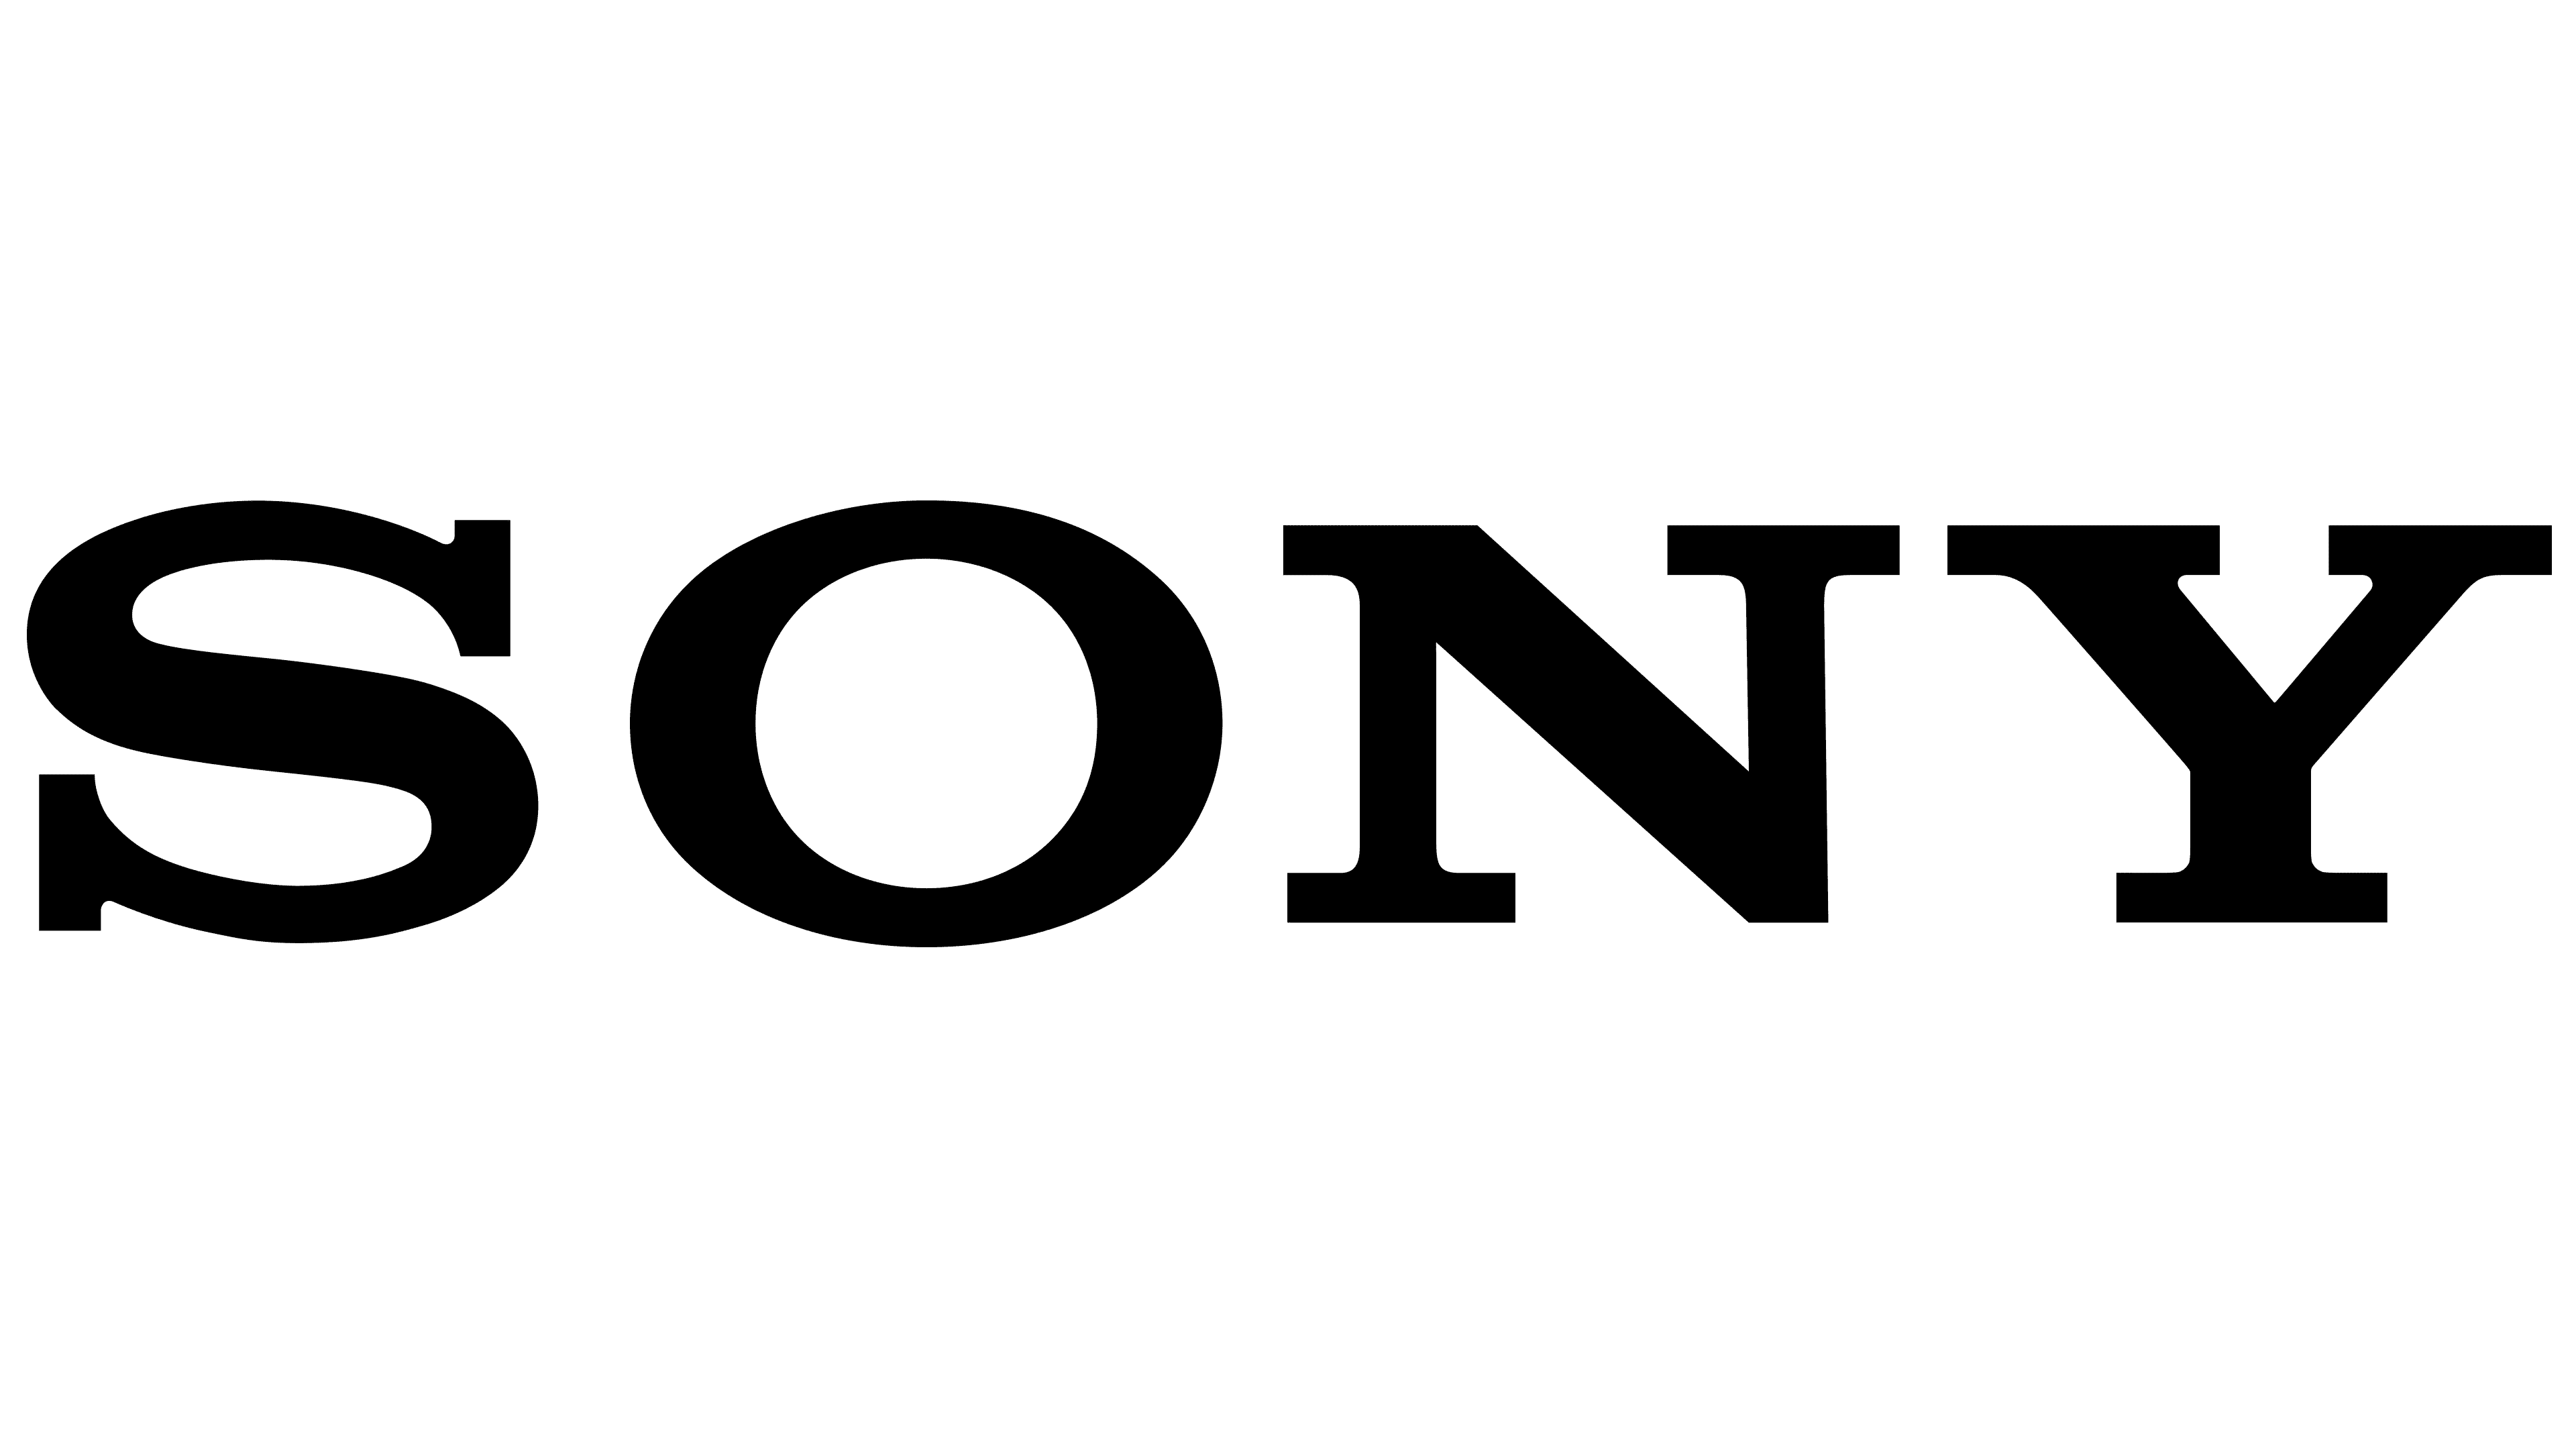 https://1000logos.net/wp-content/uploads/2021/05/Sony-logo.png